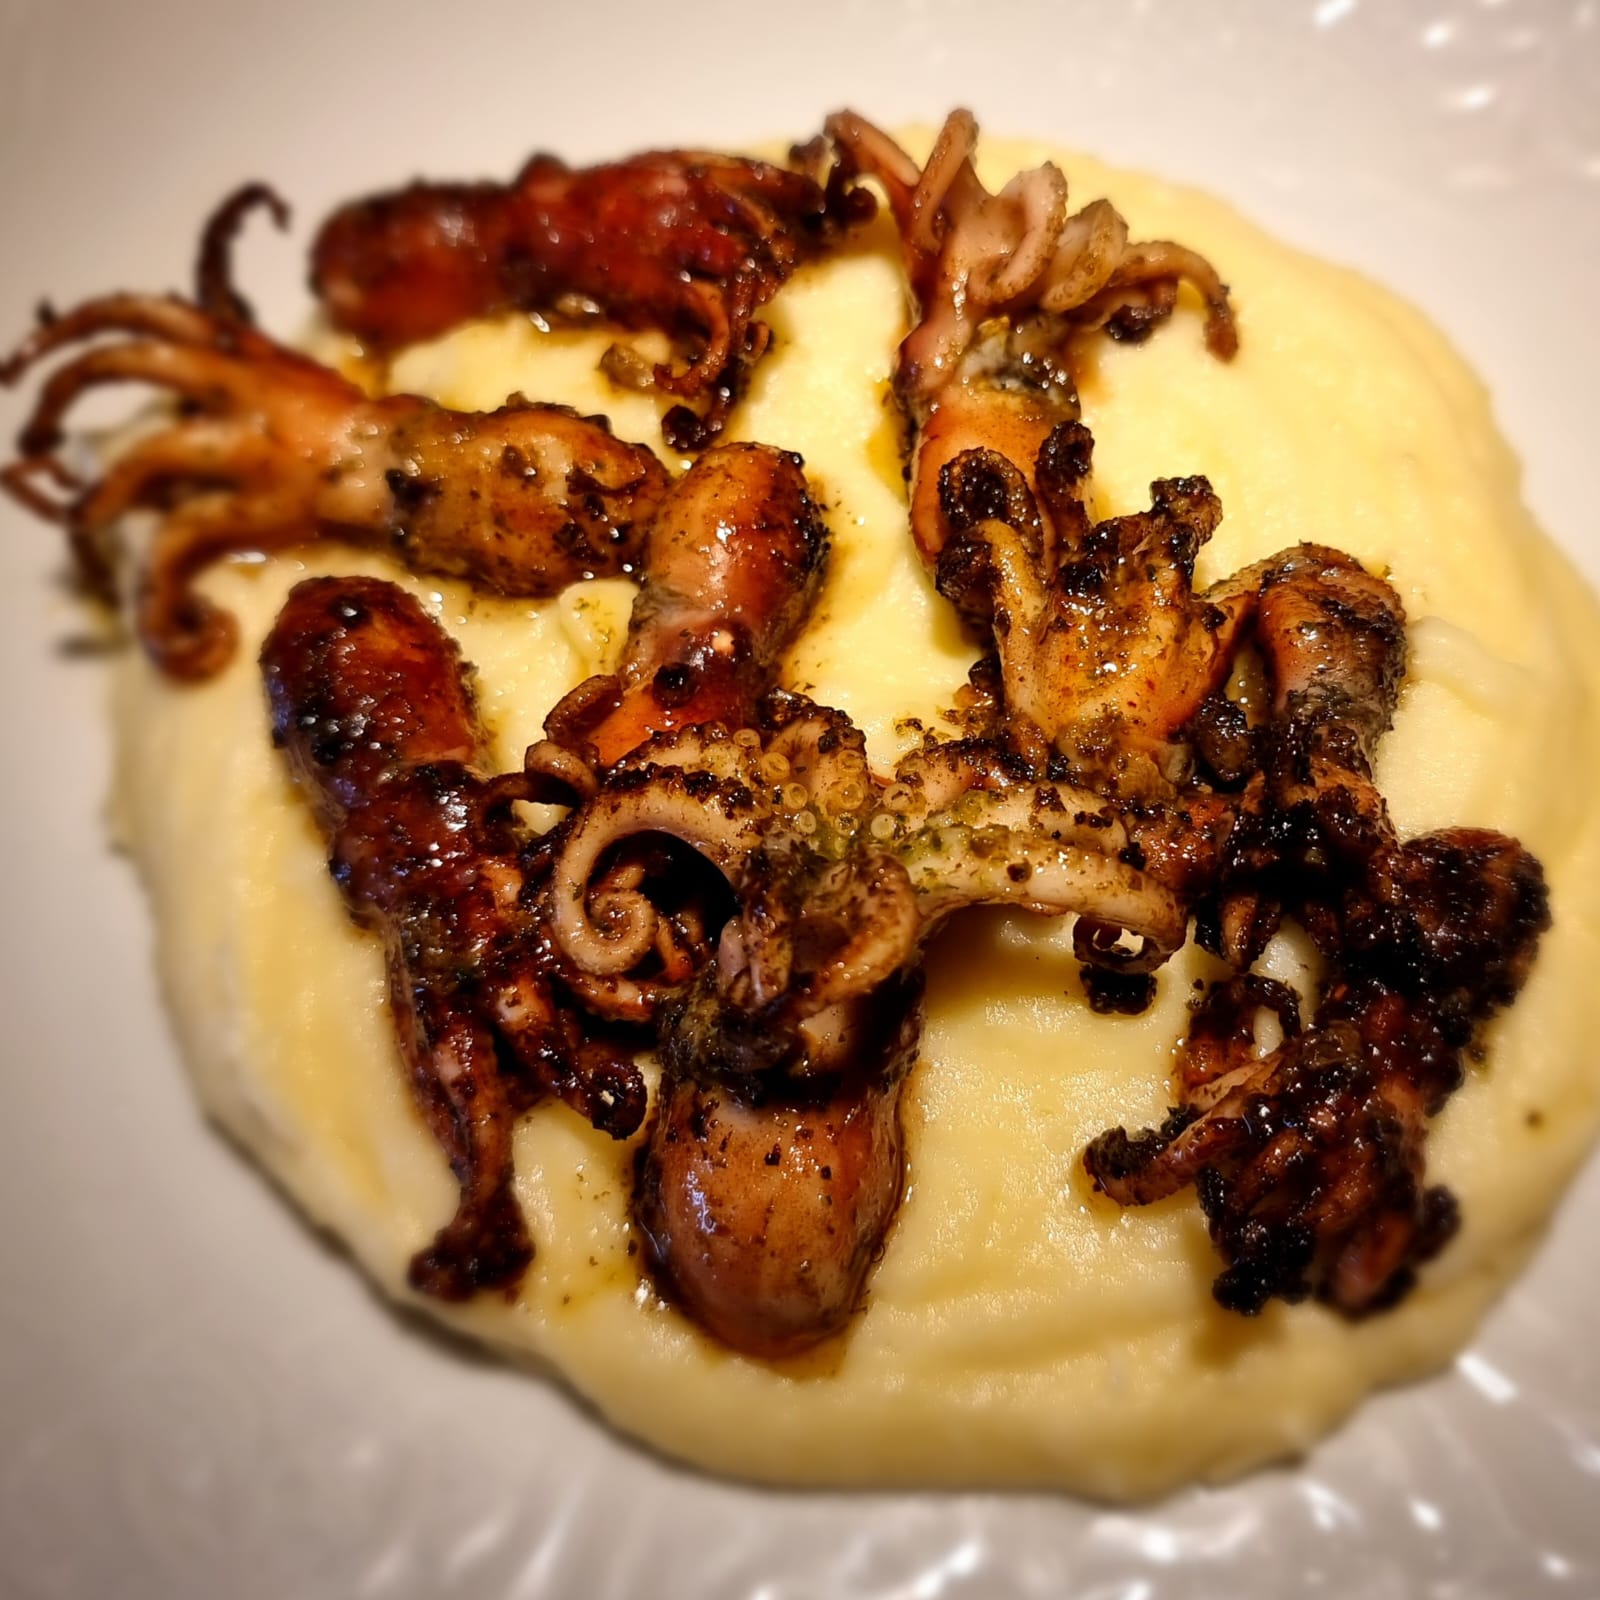 Garlic octopus with potatoes